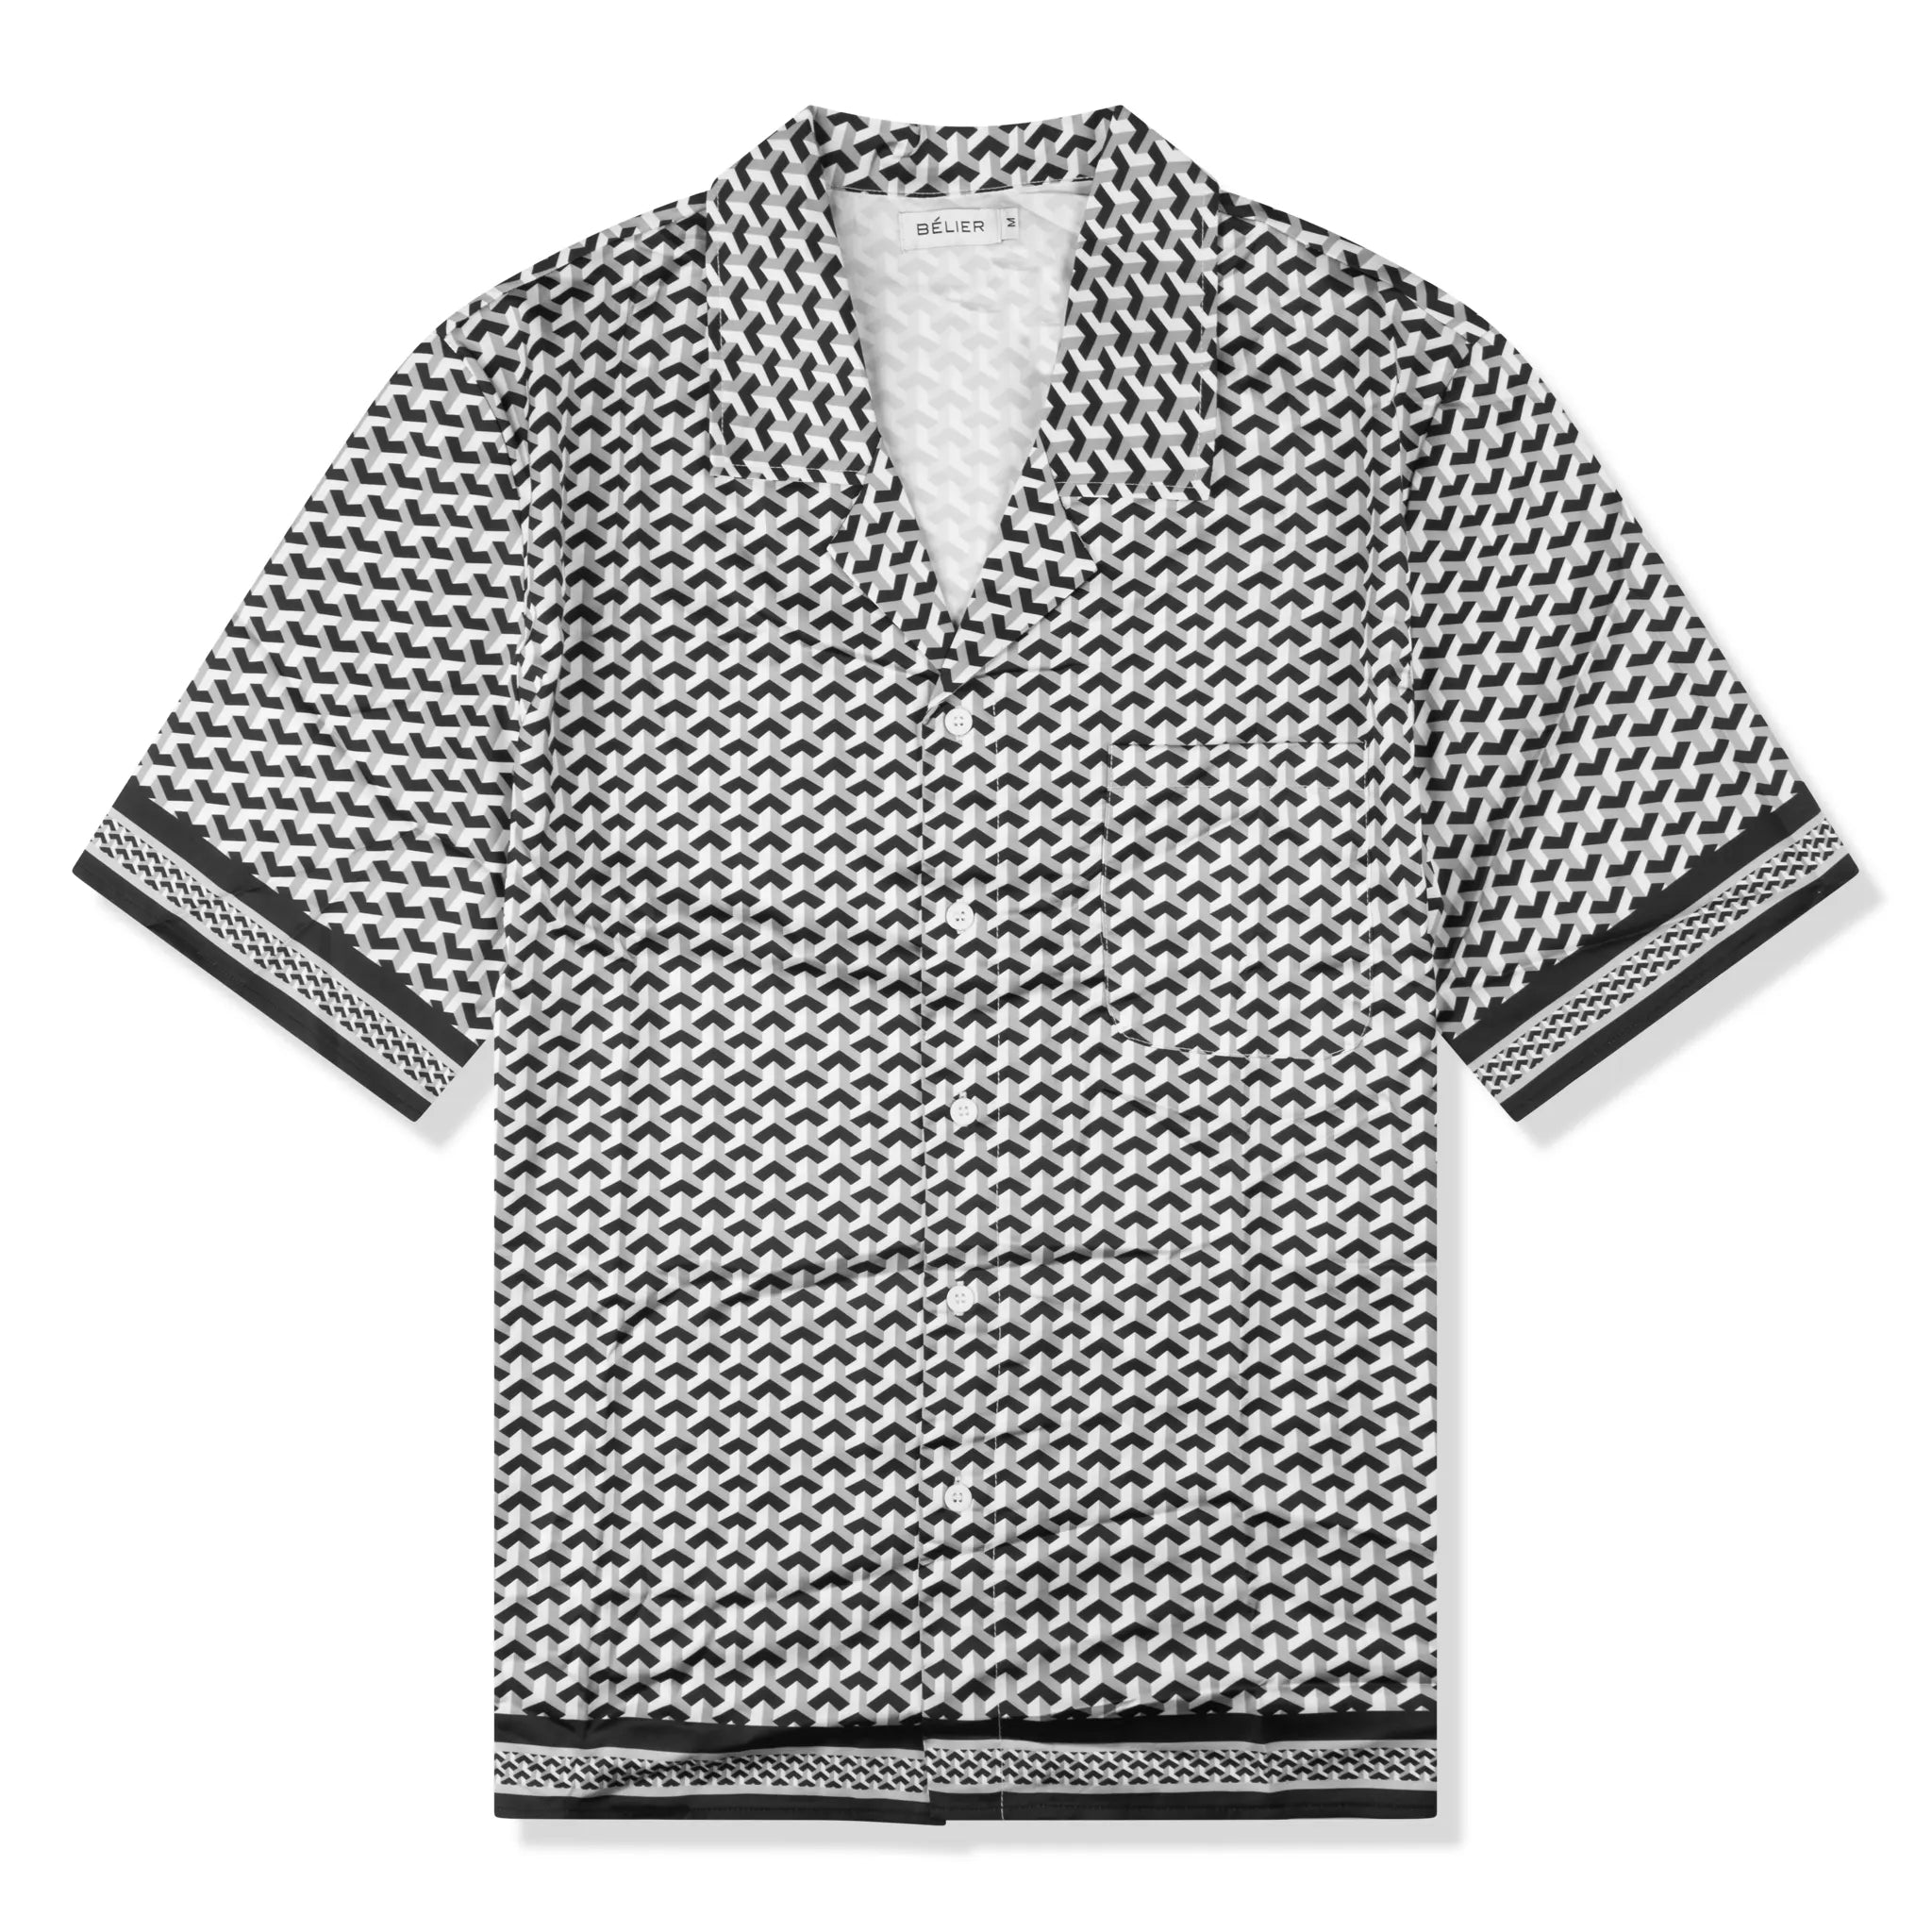 Front view of Belier Illusion Print Contrast Panel Monochrome Resort Shirt BM-181